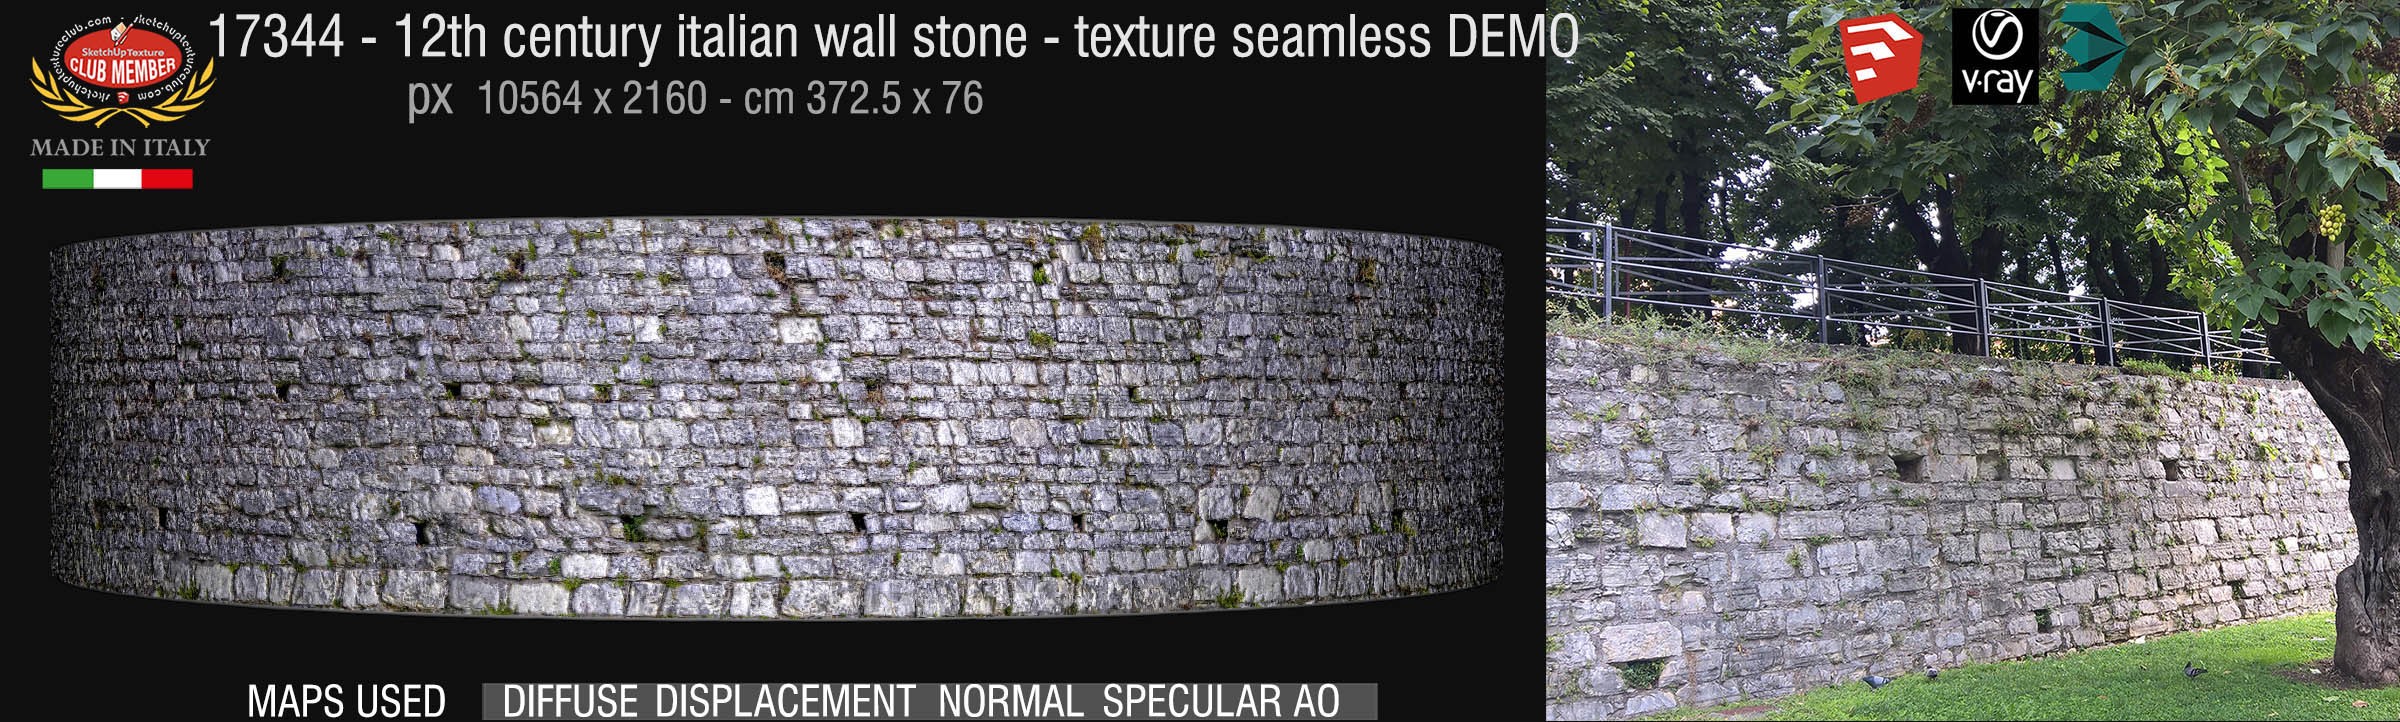 17344 12th century italian wall stone texture seamless + maps DEMO